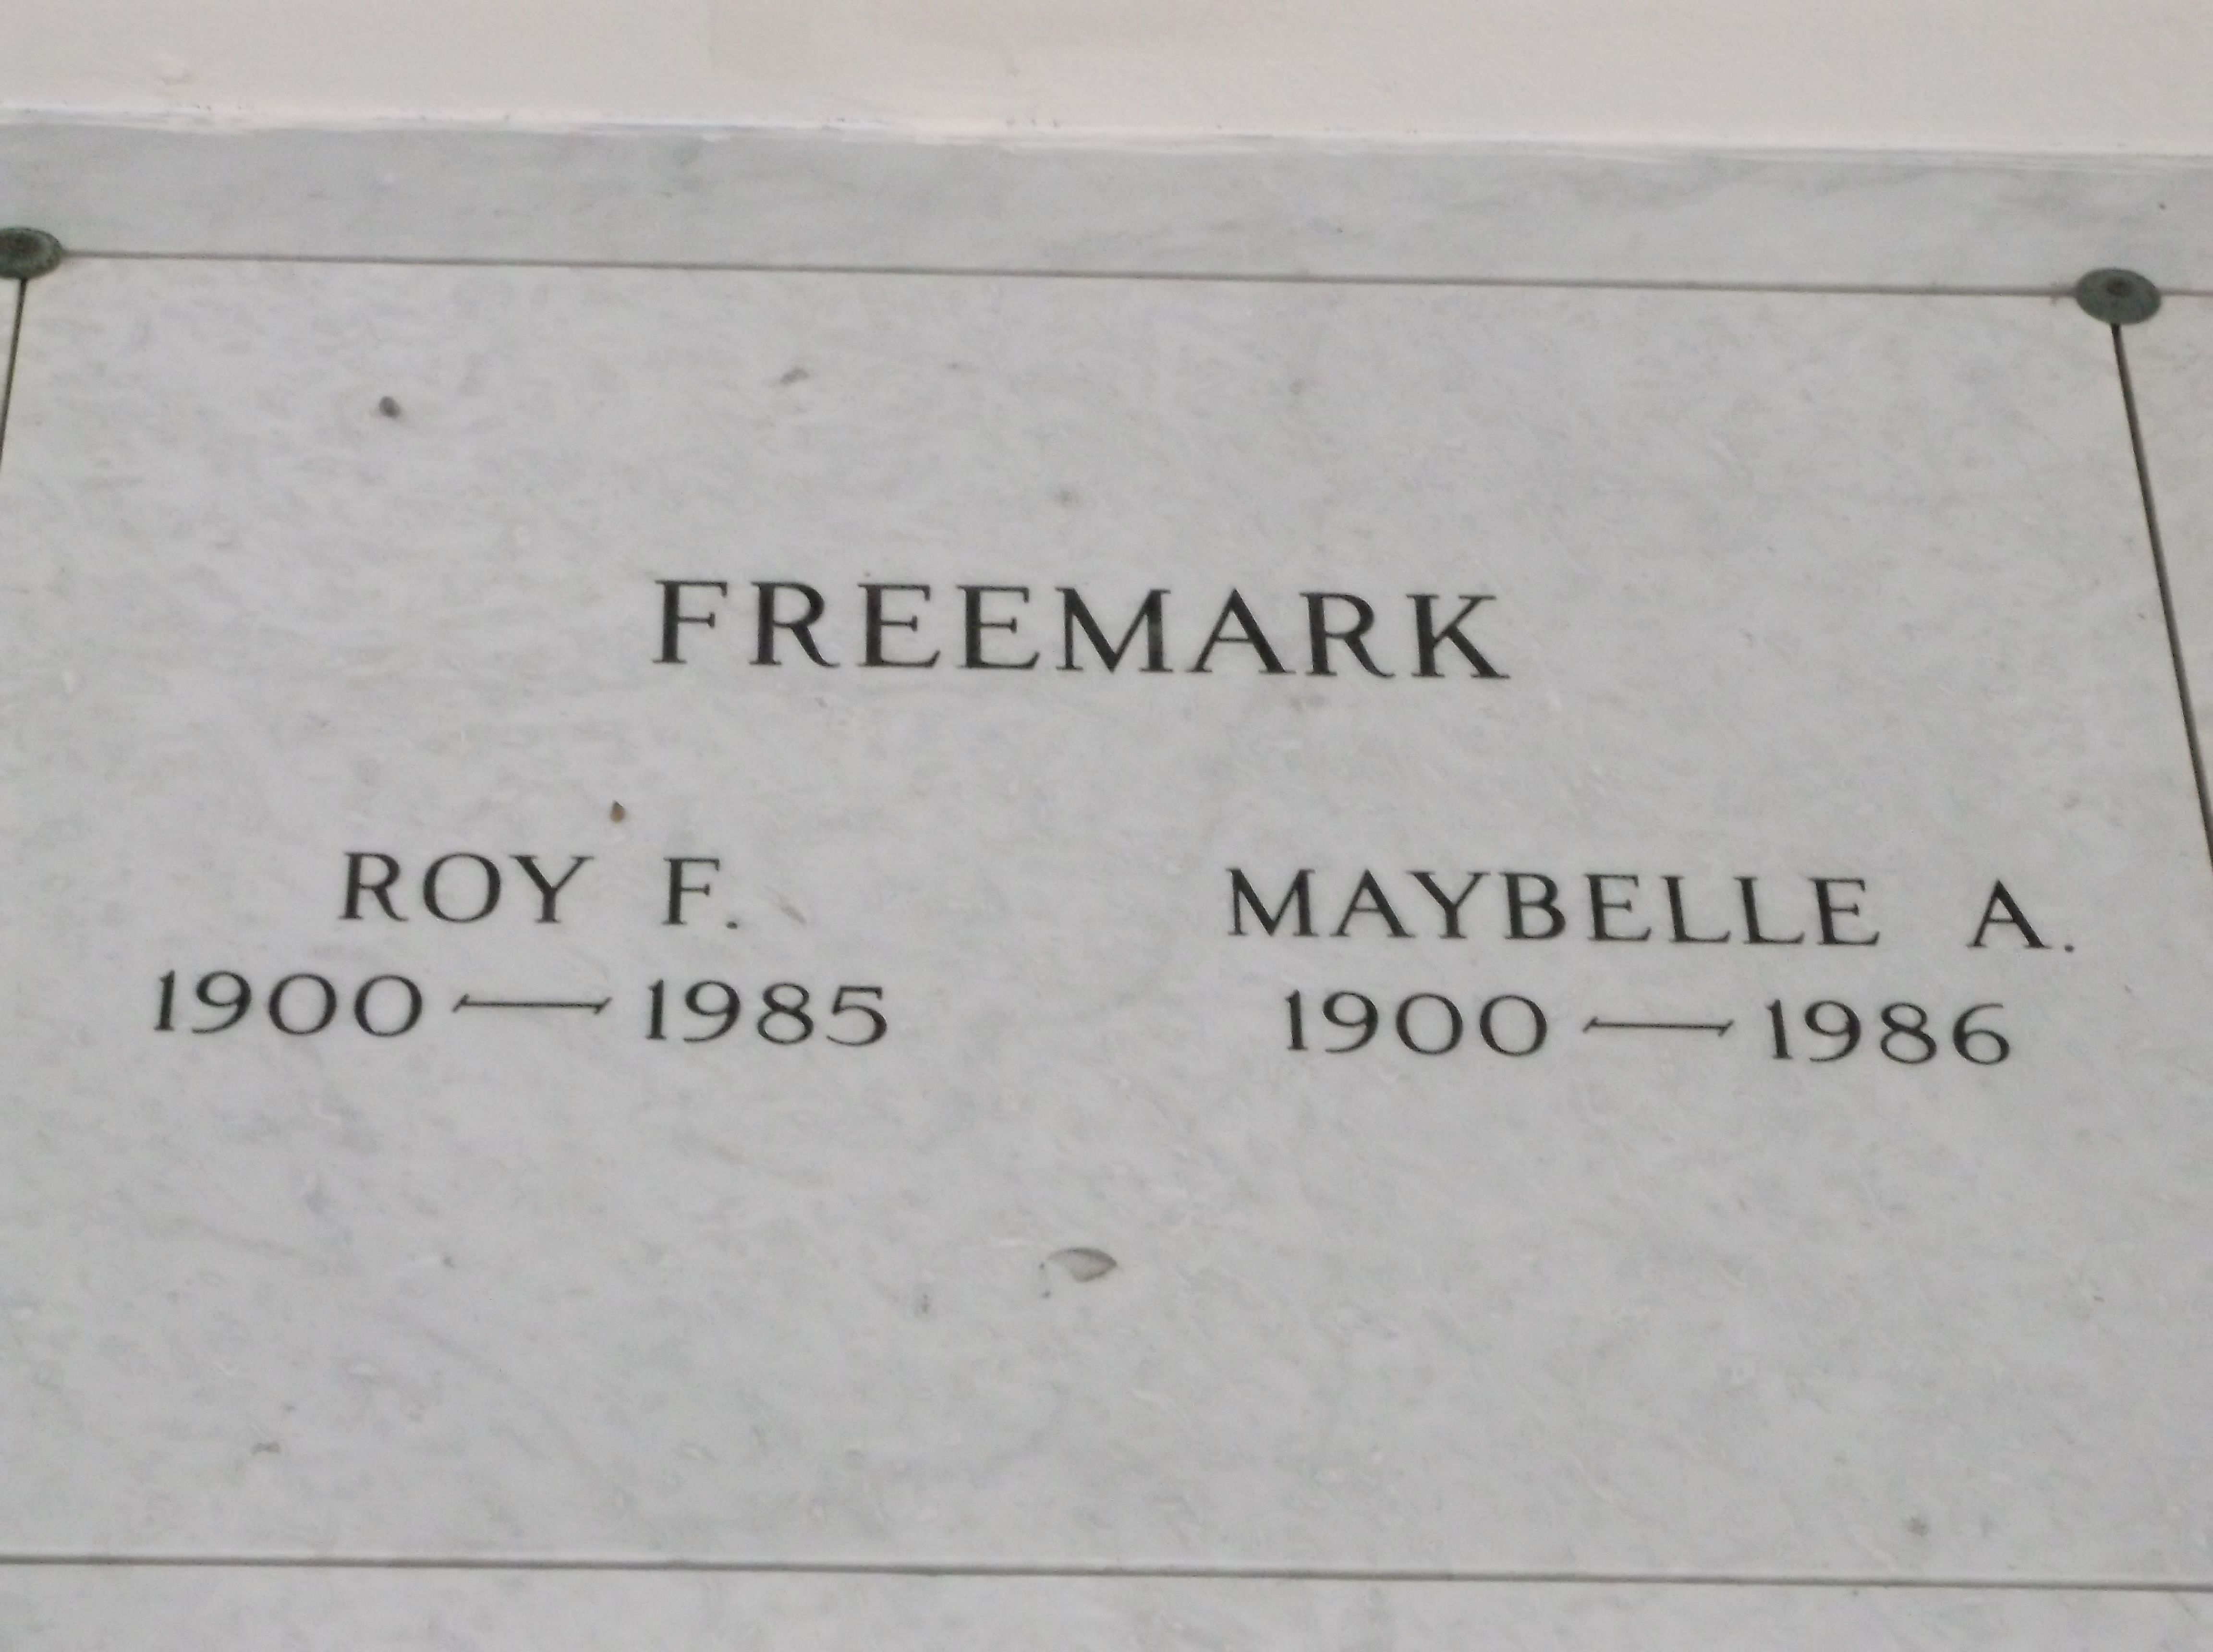 Roy F Freemark